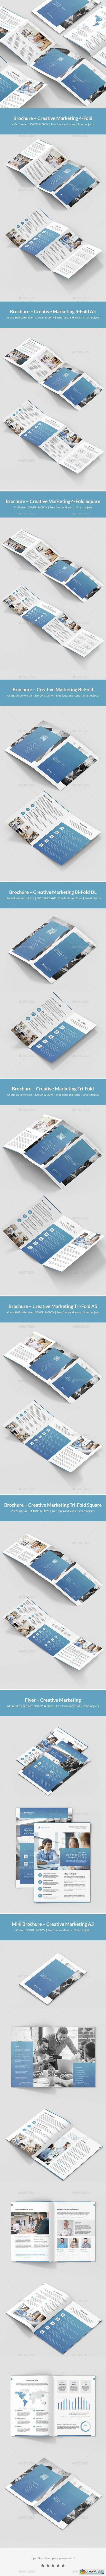 Creative Marketing – Brochures Bundle Print Templates 10 in 1